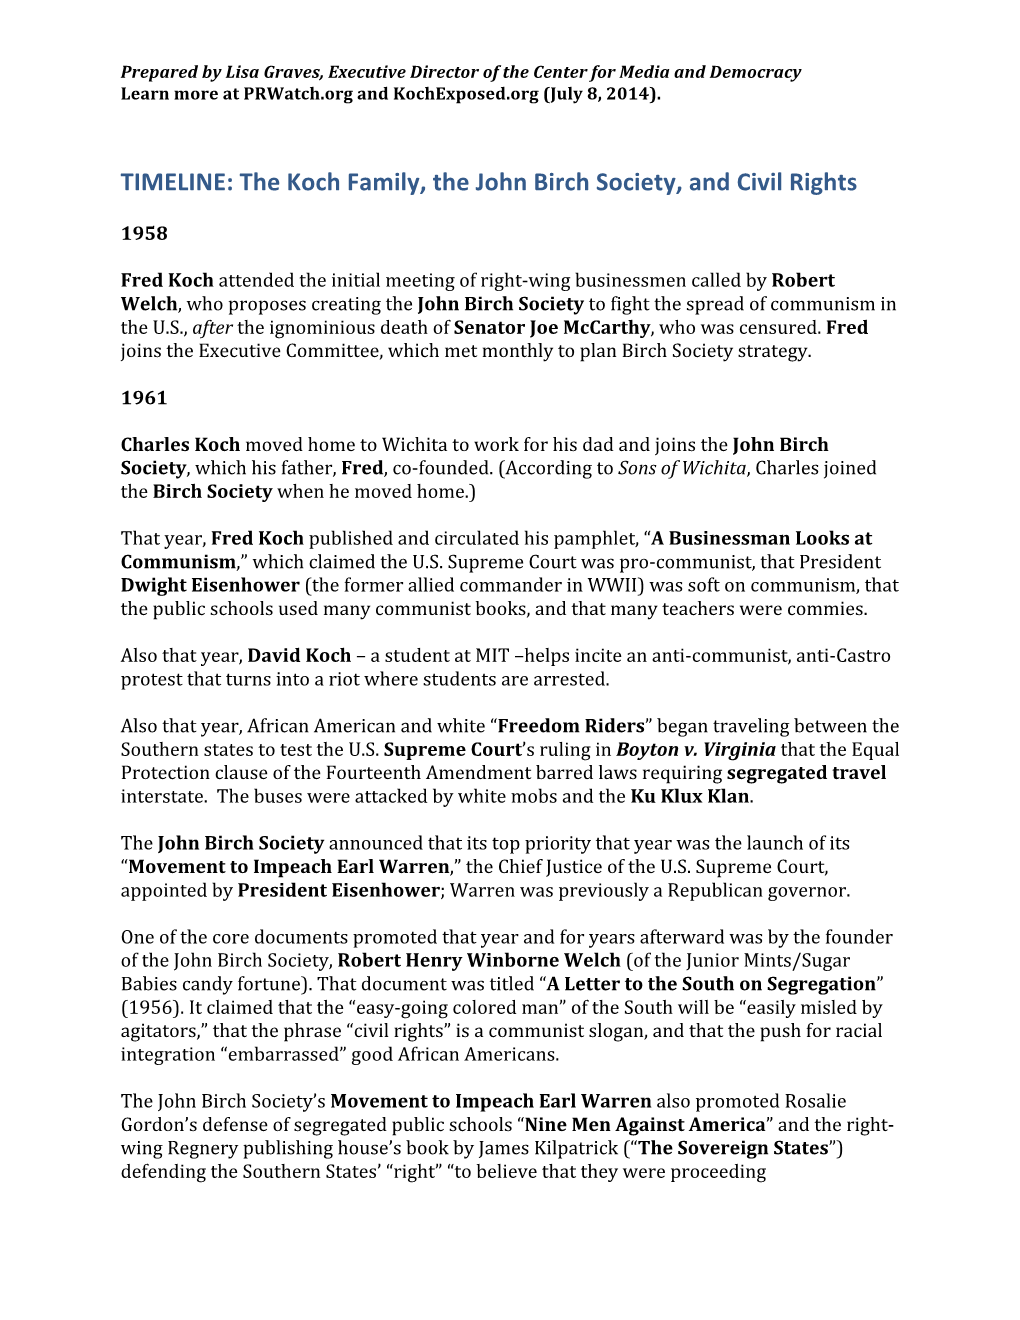 The Koch Family, the John Birch Society, and Civil Rights